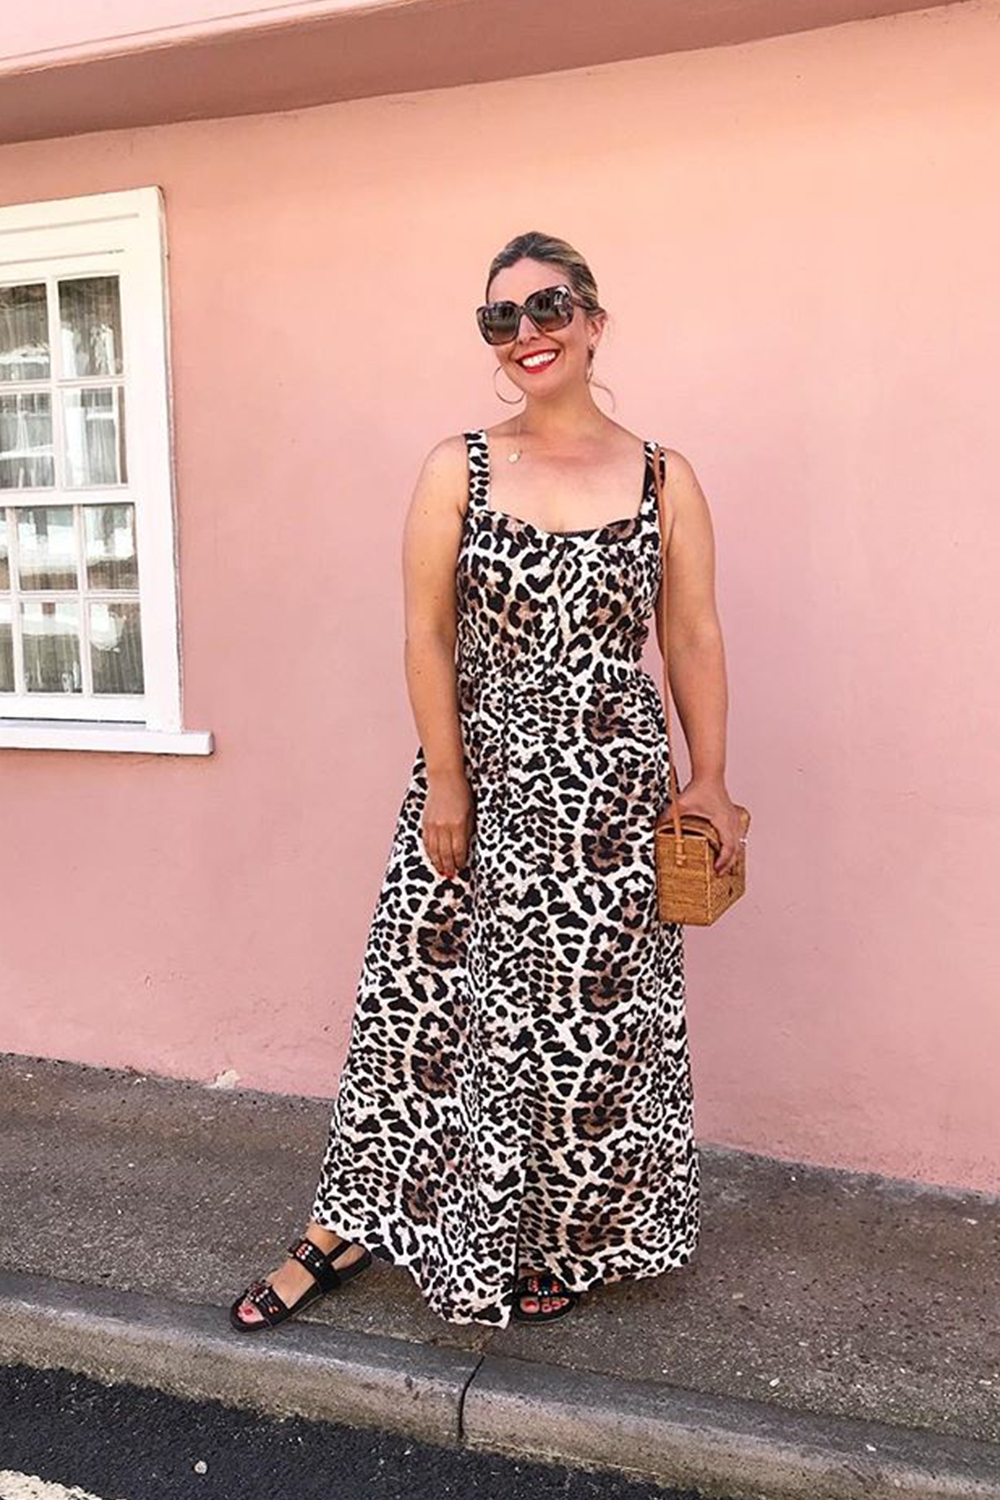 ASOS leopard print dress: Erica Davies wearing asos dress